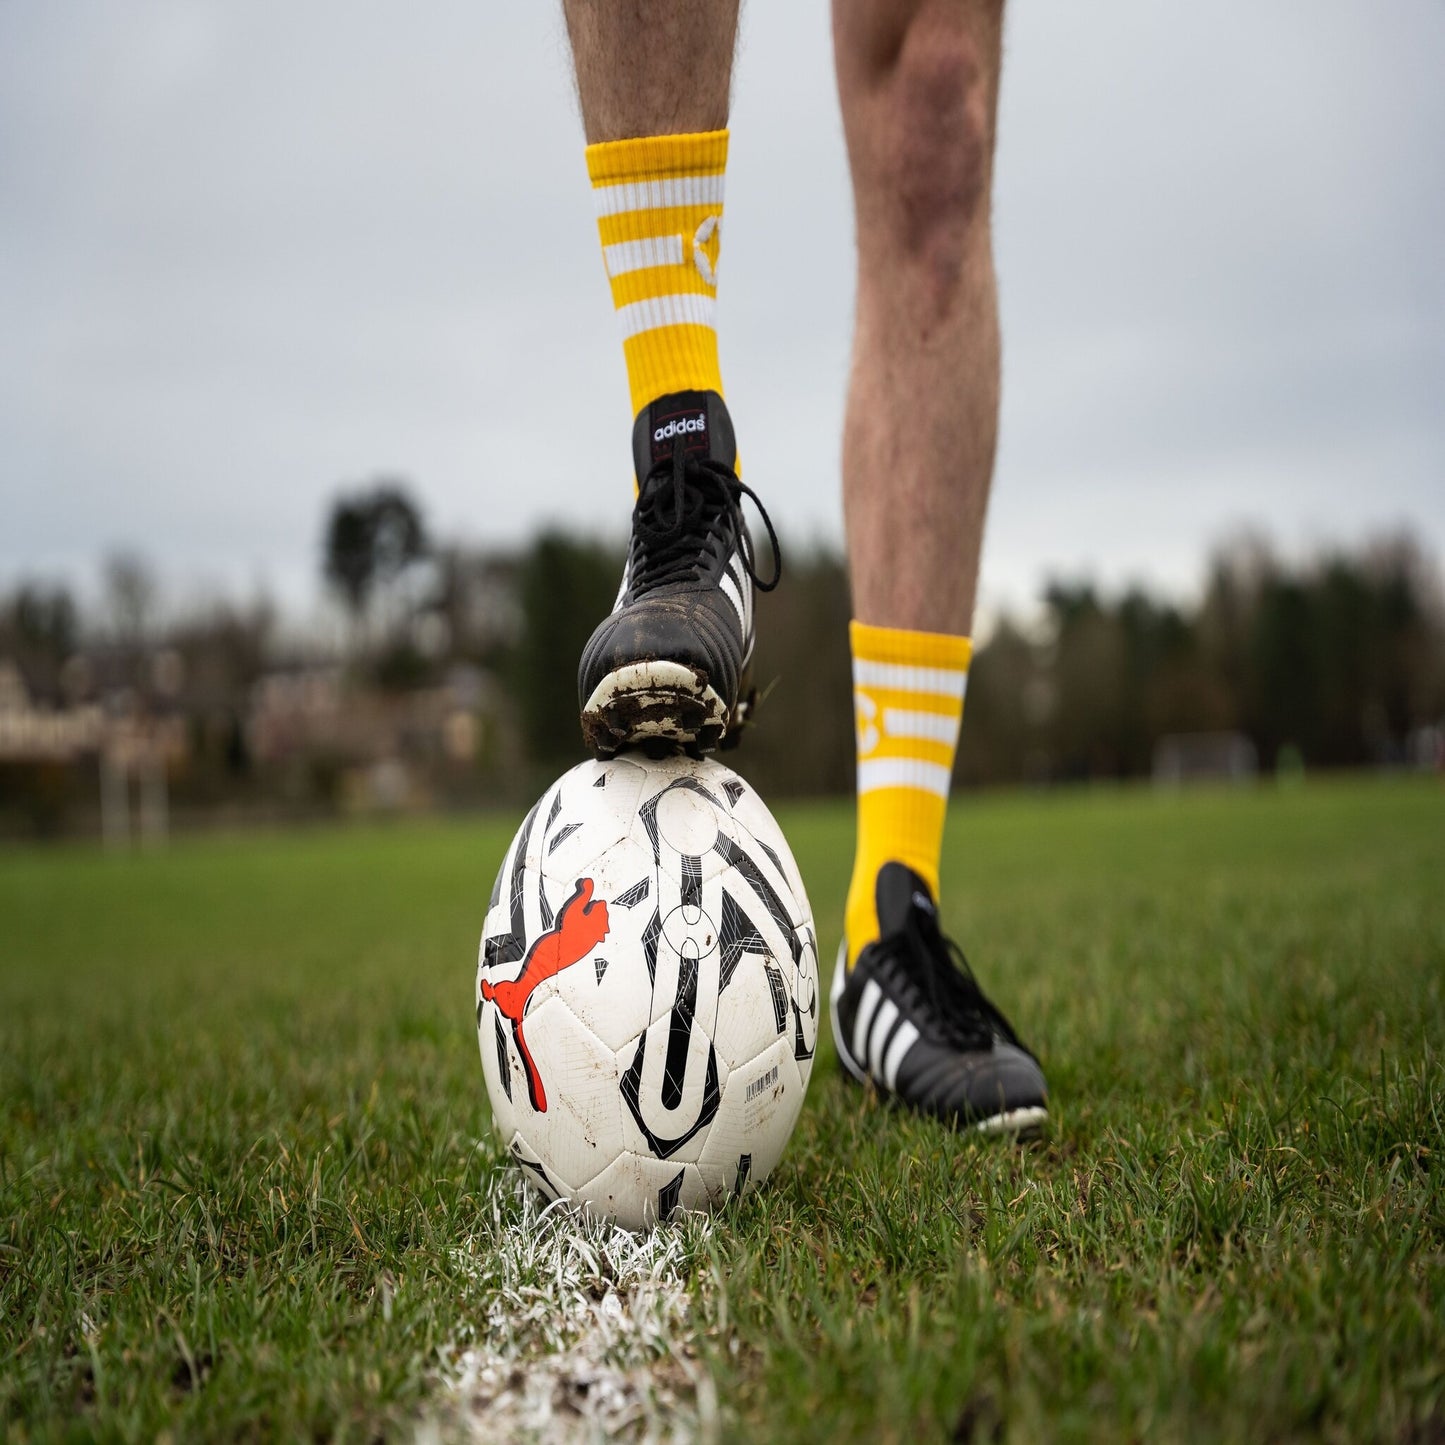 360 Degree Grip Socks - Yellow and White